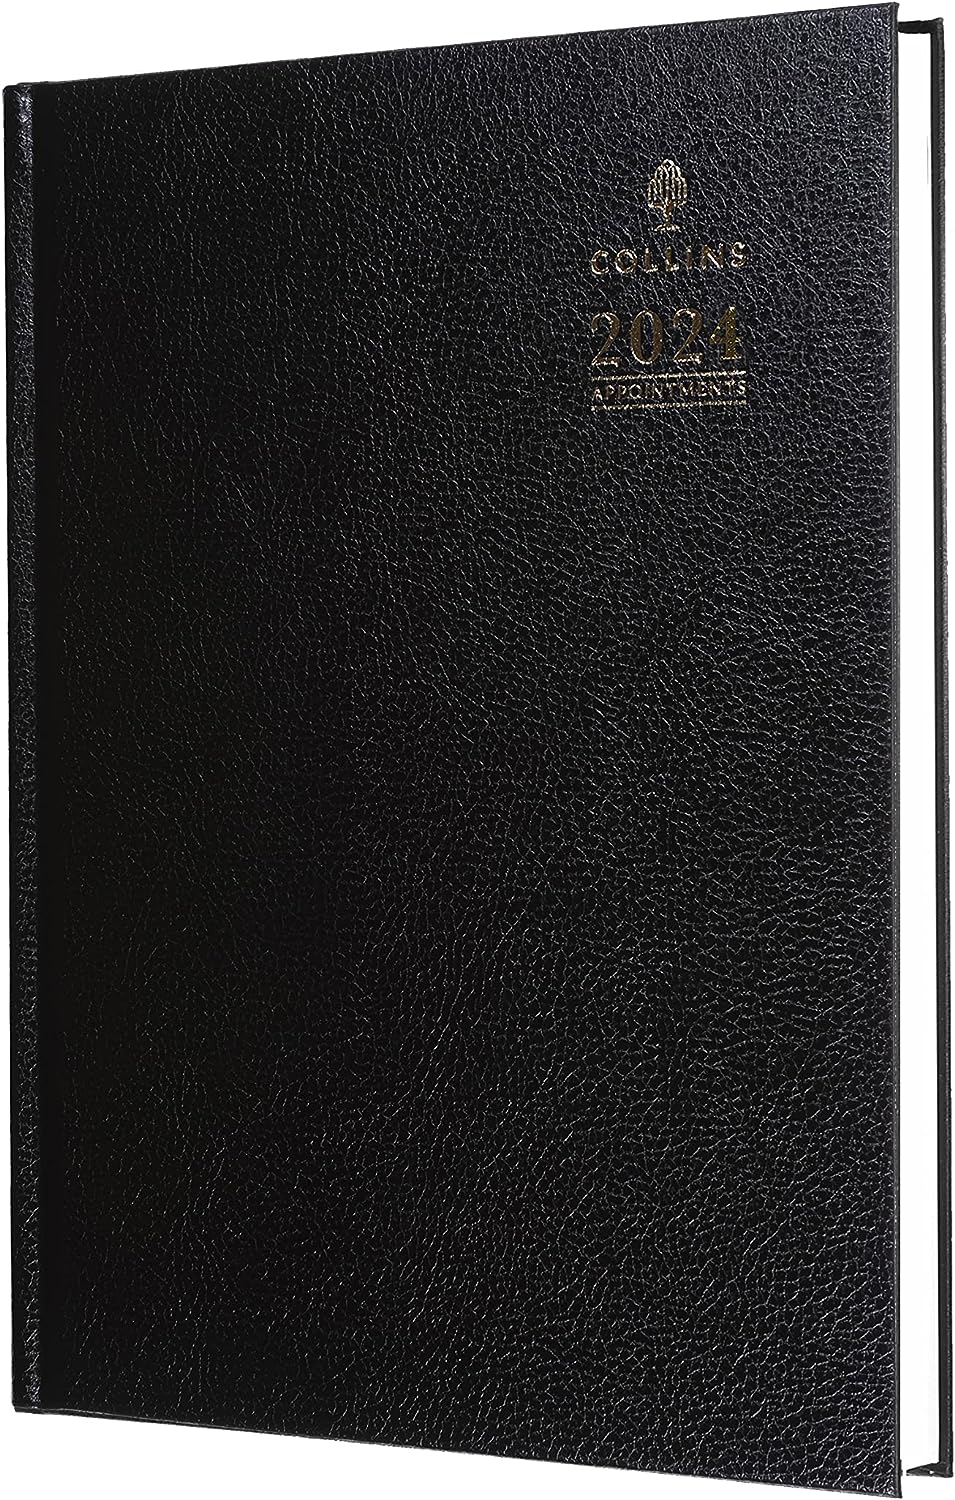 standard-desk-2024-diary-a4-business-diar